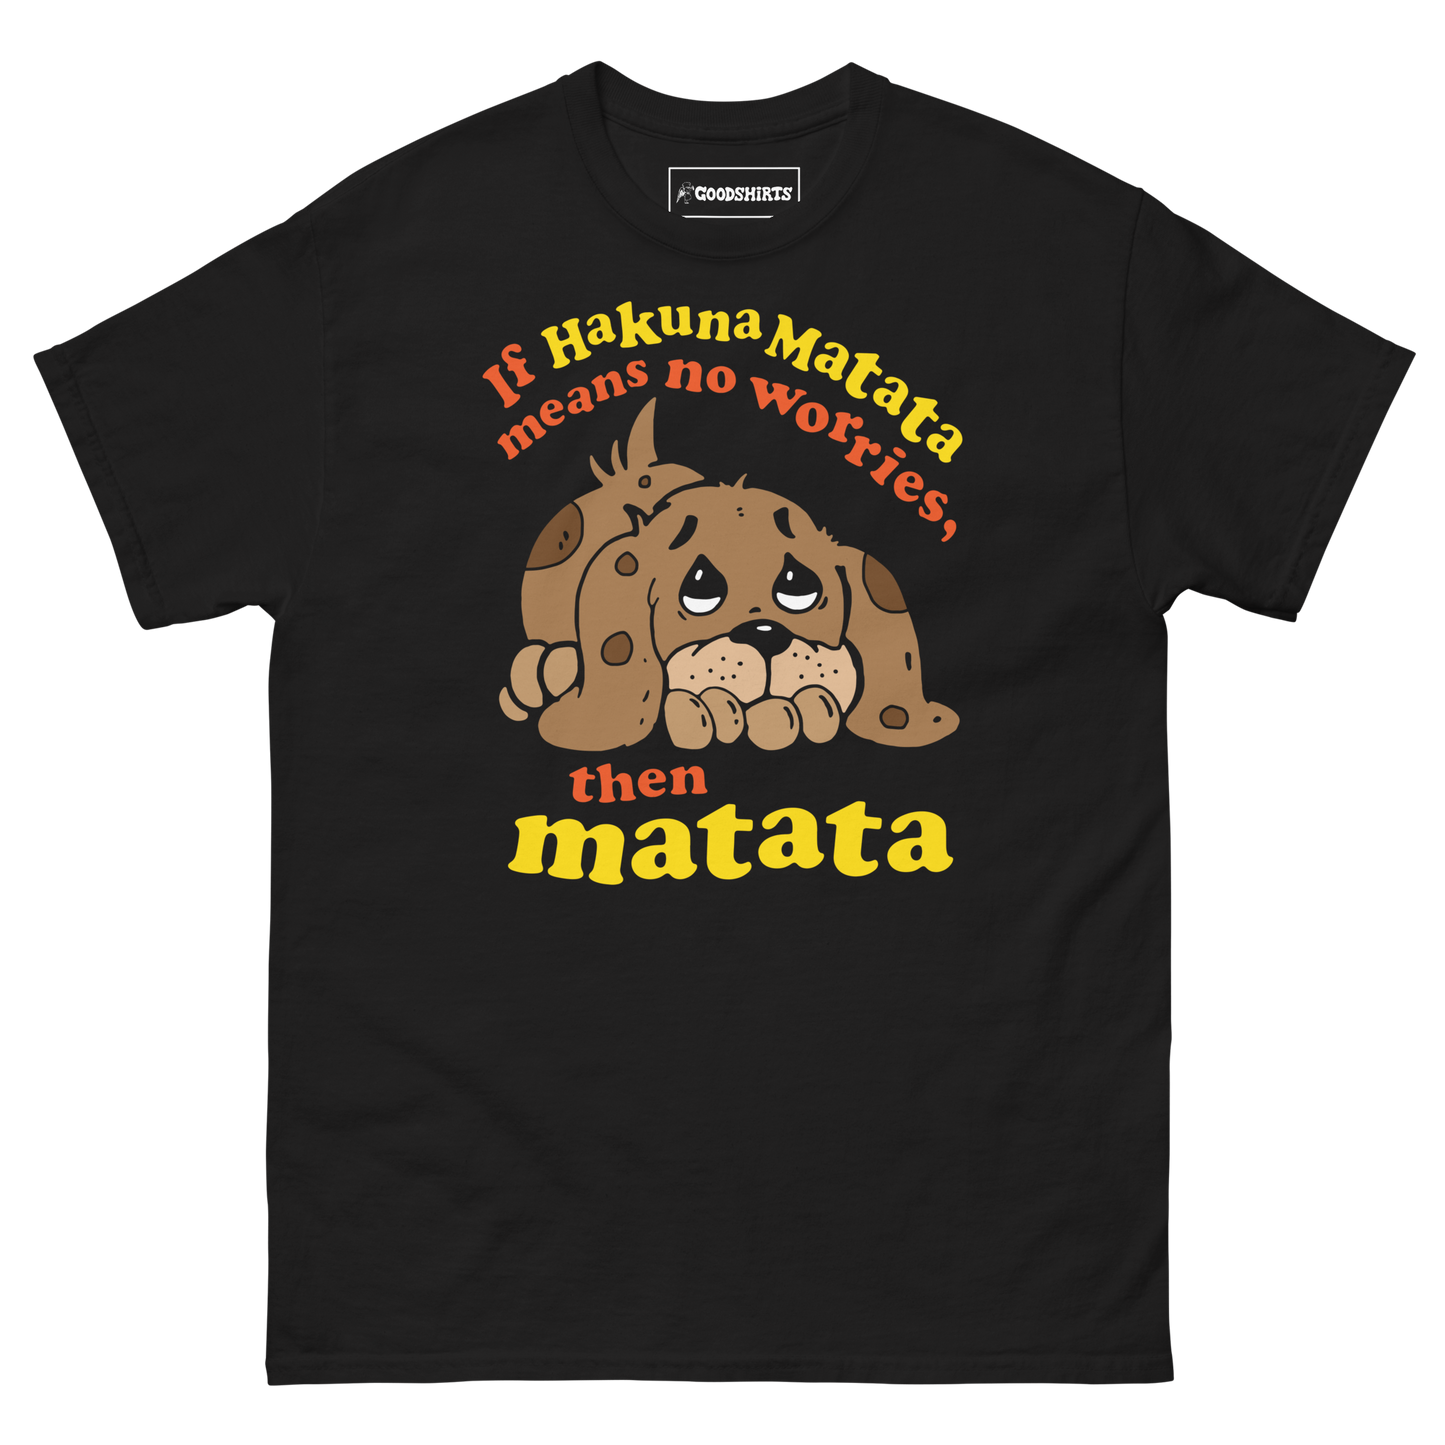 If Hakuna Matata Means No Worries, Then Matata.